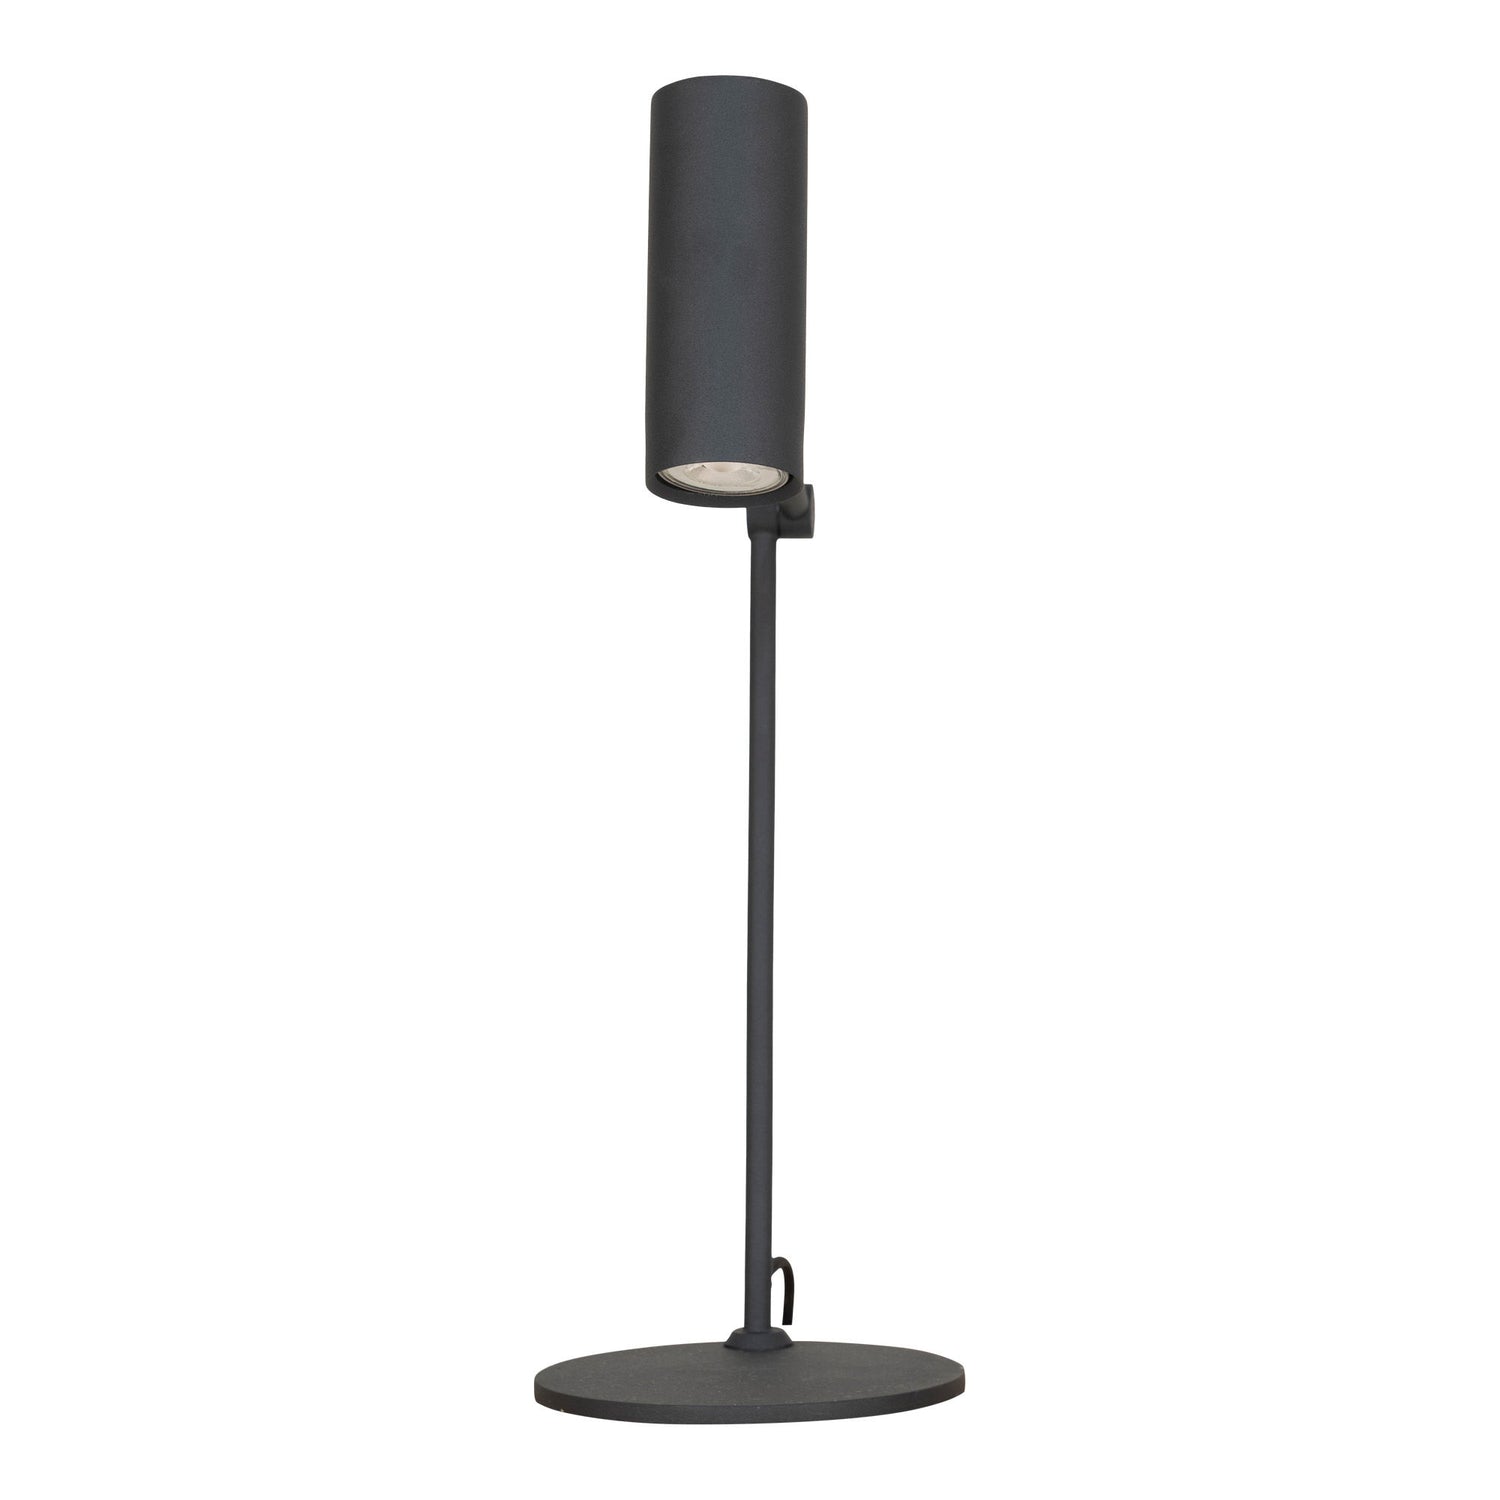 Paris Desk Lamp - Lampa i svart med tygsladd glödlampa: GU10/5W LED IP20 - 1 - PCS